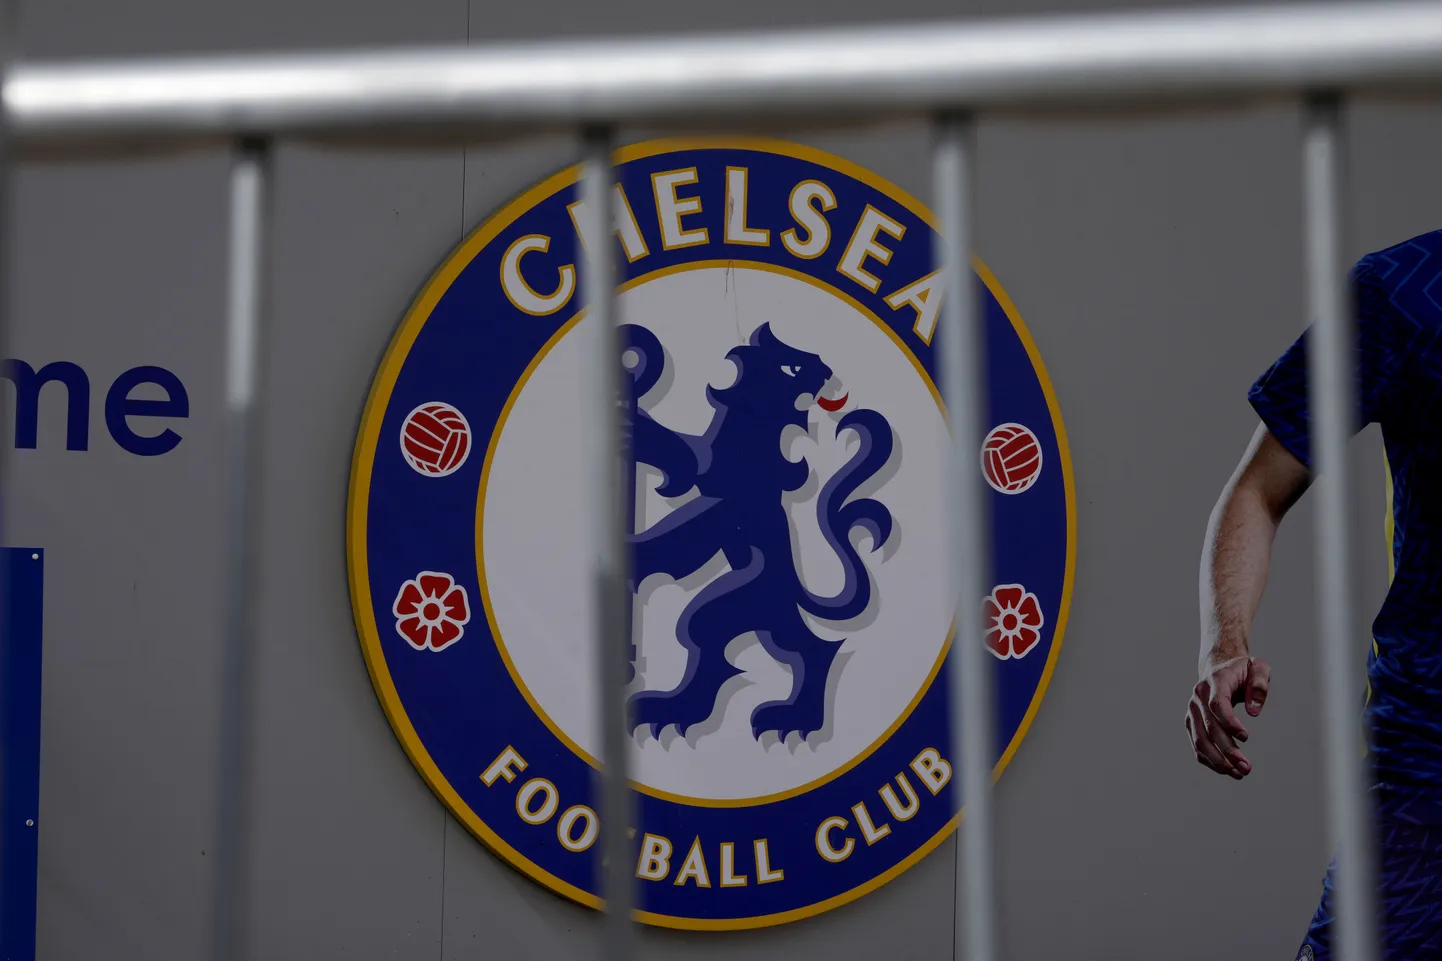 Londoni Chelsea logo.